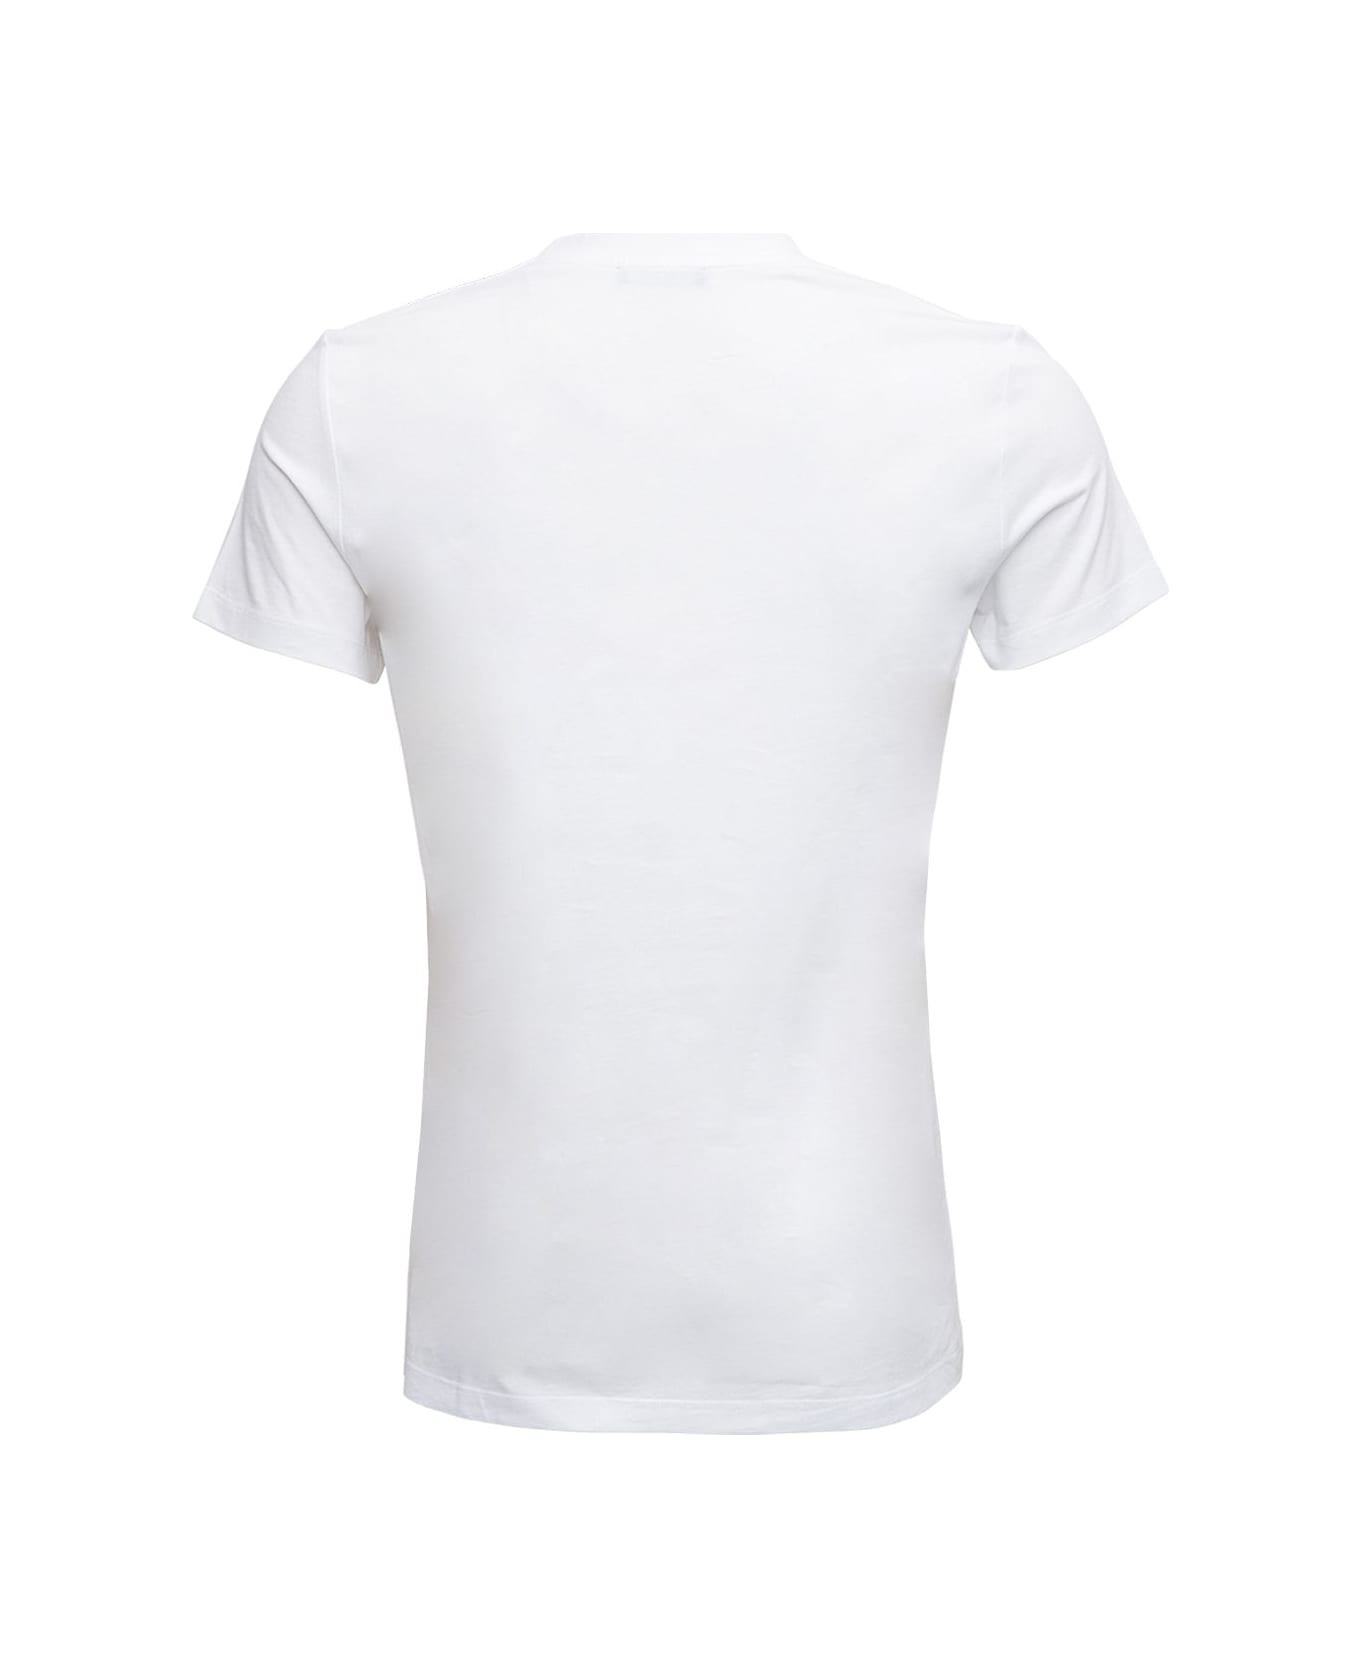 Balmain White Jersey T-shirt With Contrasting Logo Print To The Front top Balmain Man - White